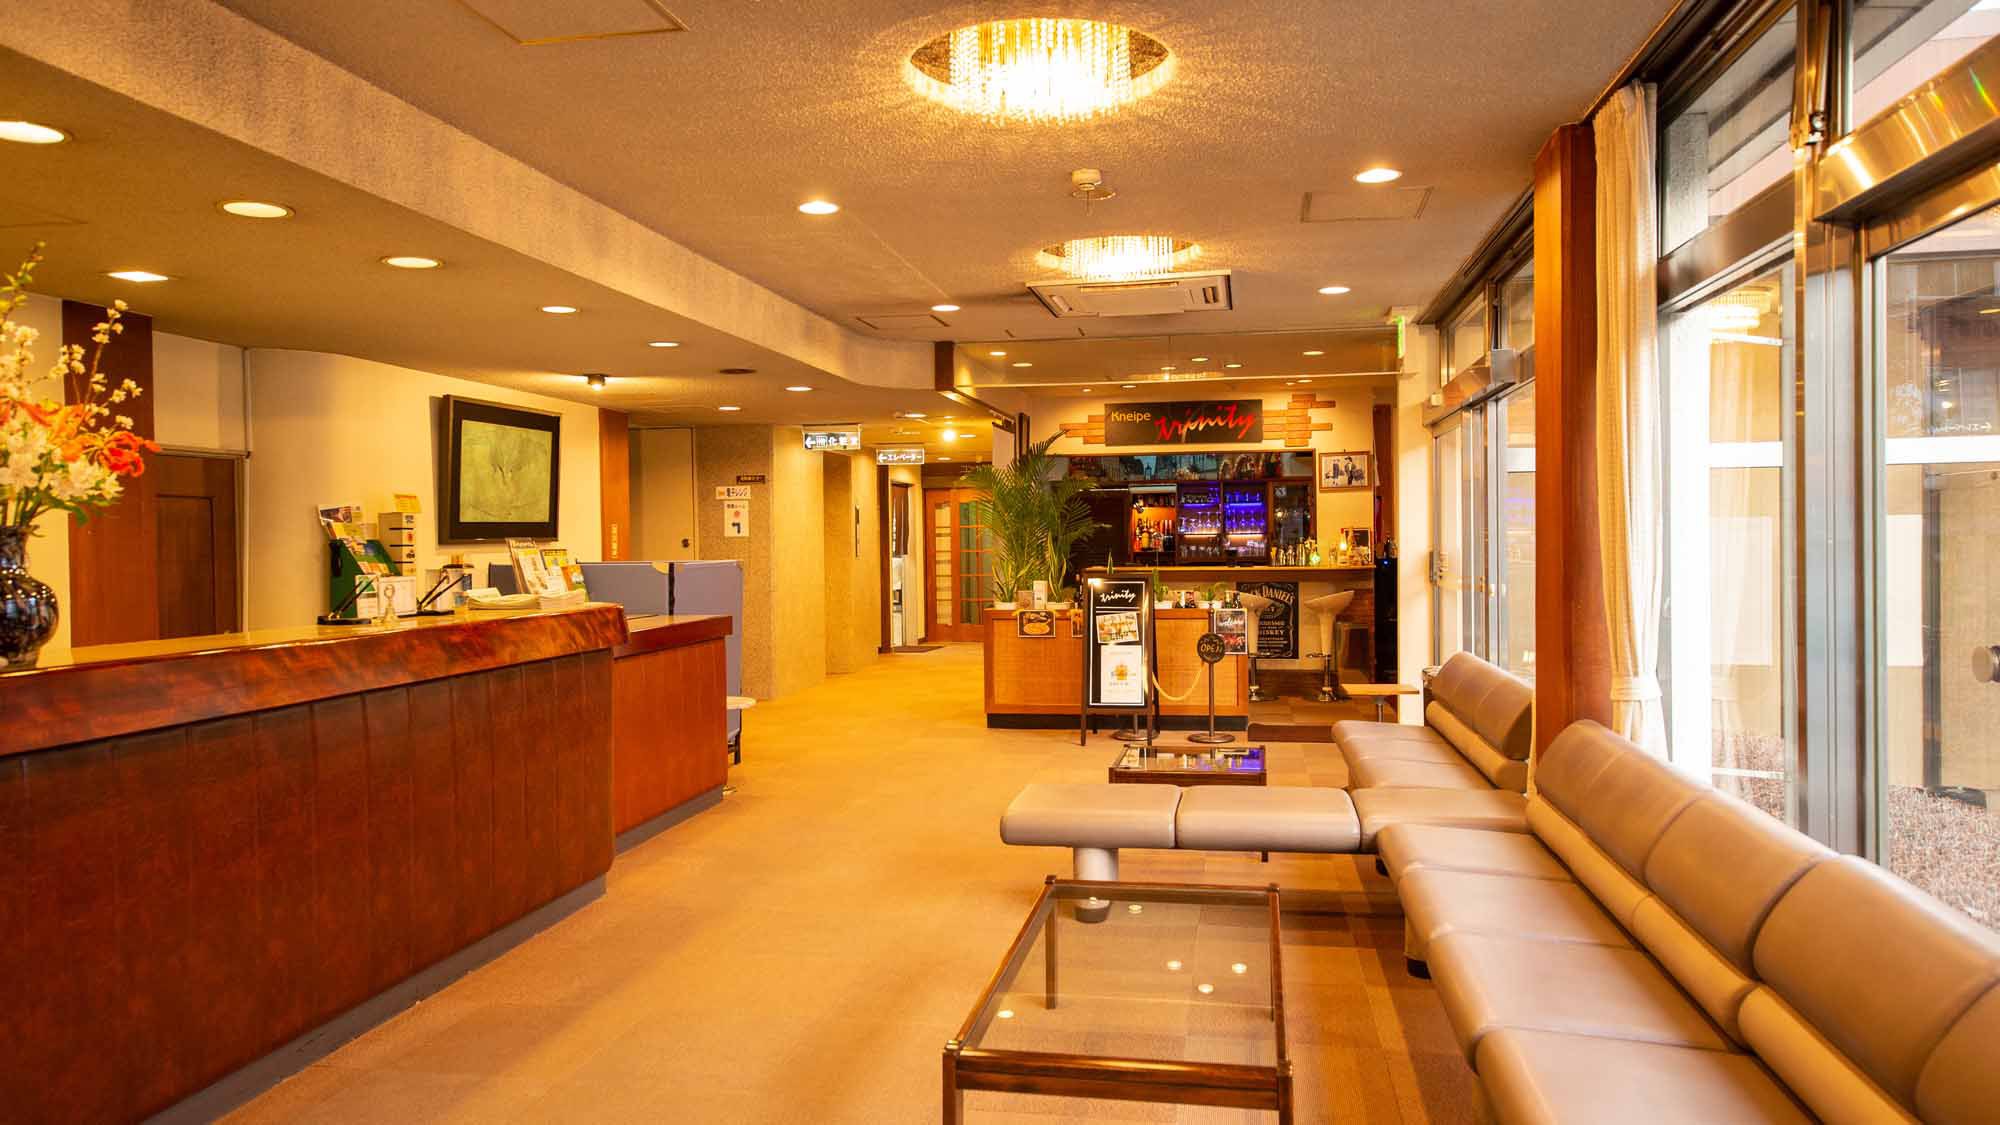 Komagane Green Hotel in the Heart of Komagane, Japan: Reviews on Komagane Green Hotel